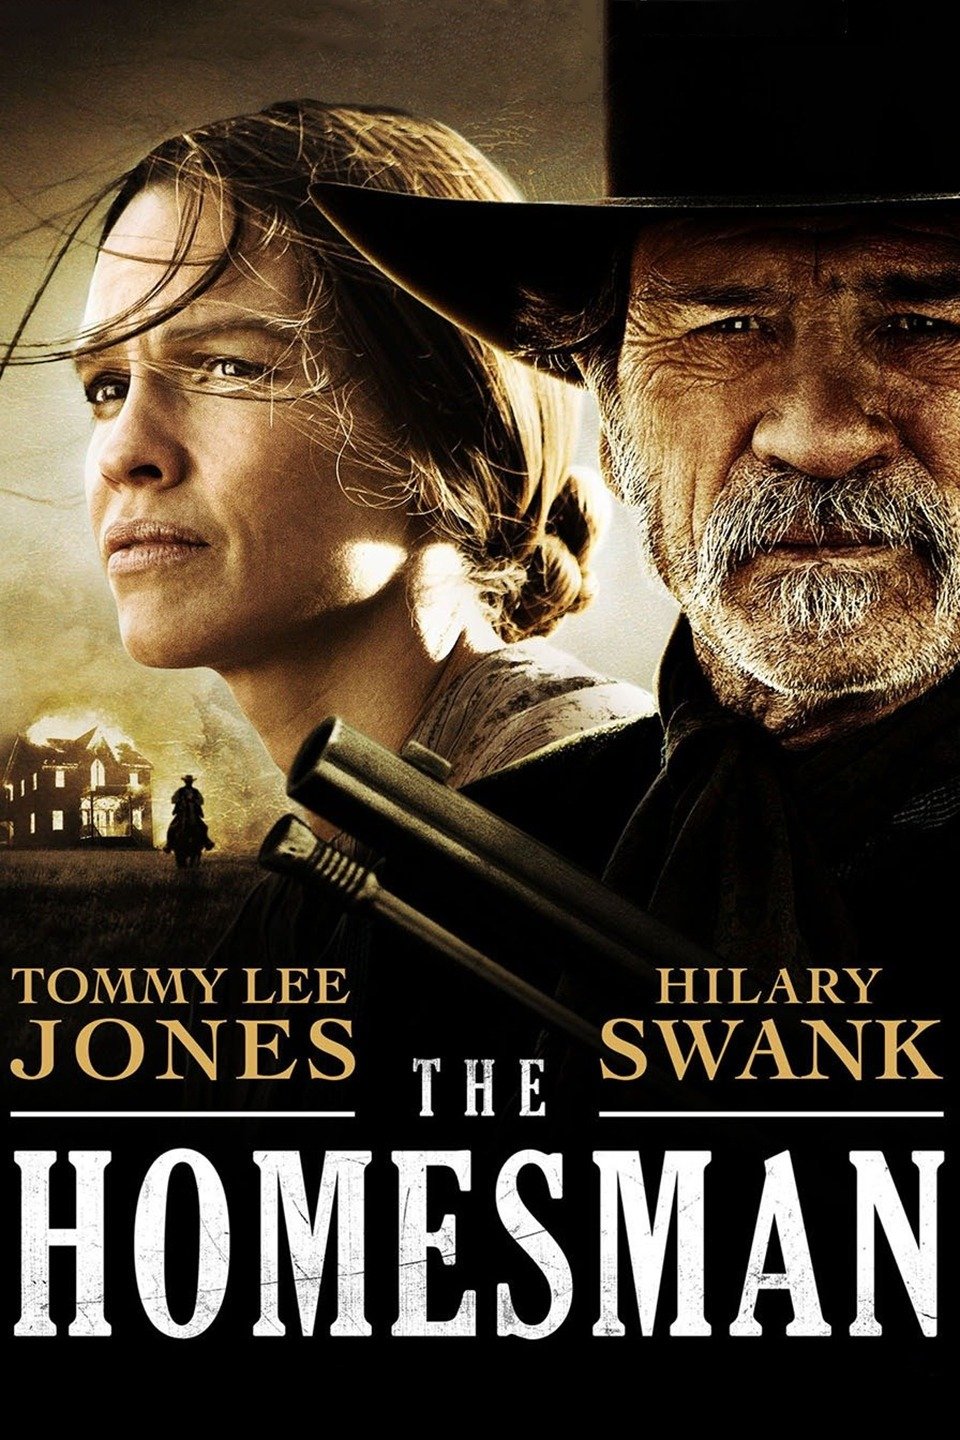 [MINI-HD] The Homesman (2014) ศรัทธา ความหวัง แดนเกียรติยศ [1080p] [พากย์อังกฤษ DTS] [BDRip.DTS.AC3.HC.SUBTH] [Soundtrack – บรรยายไทย] [เสียงอังกฤษ + ซับไทย] [ONE2UP]